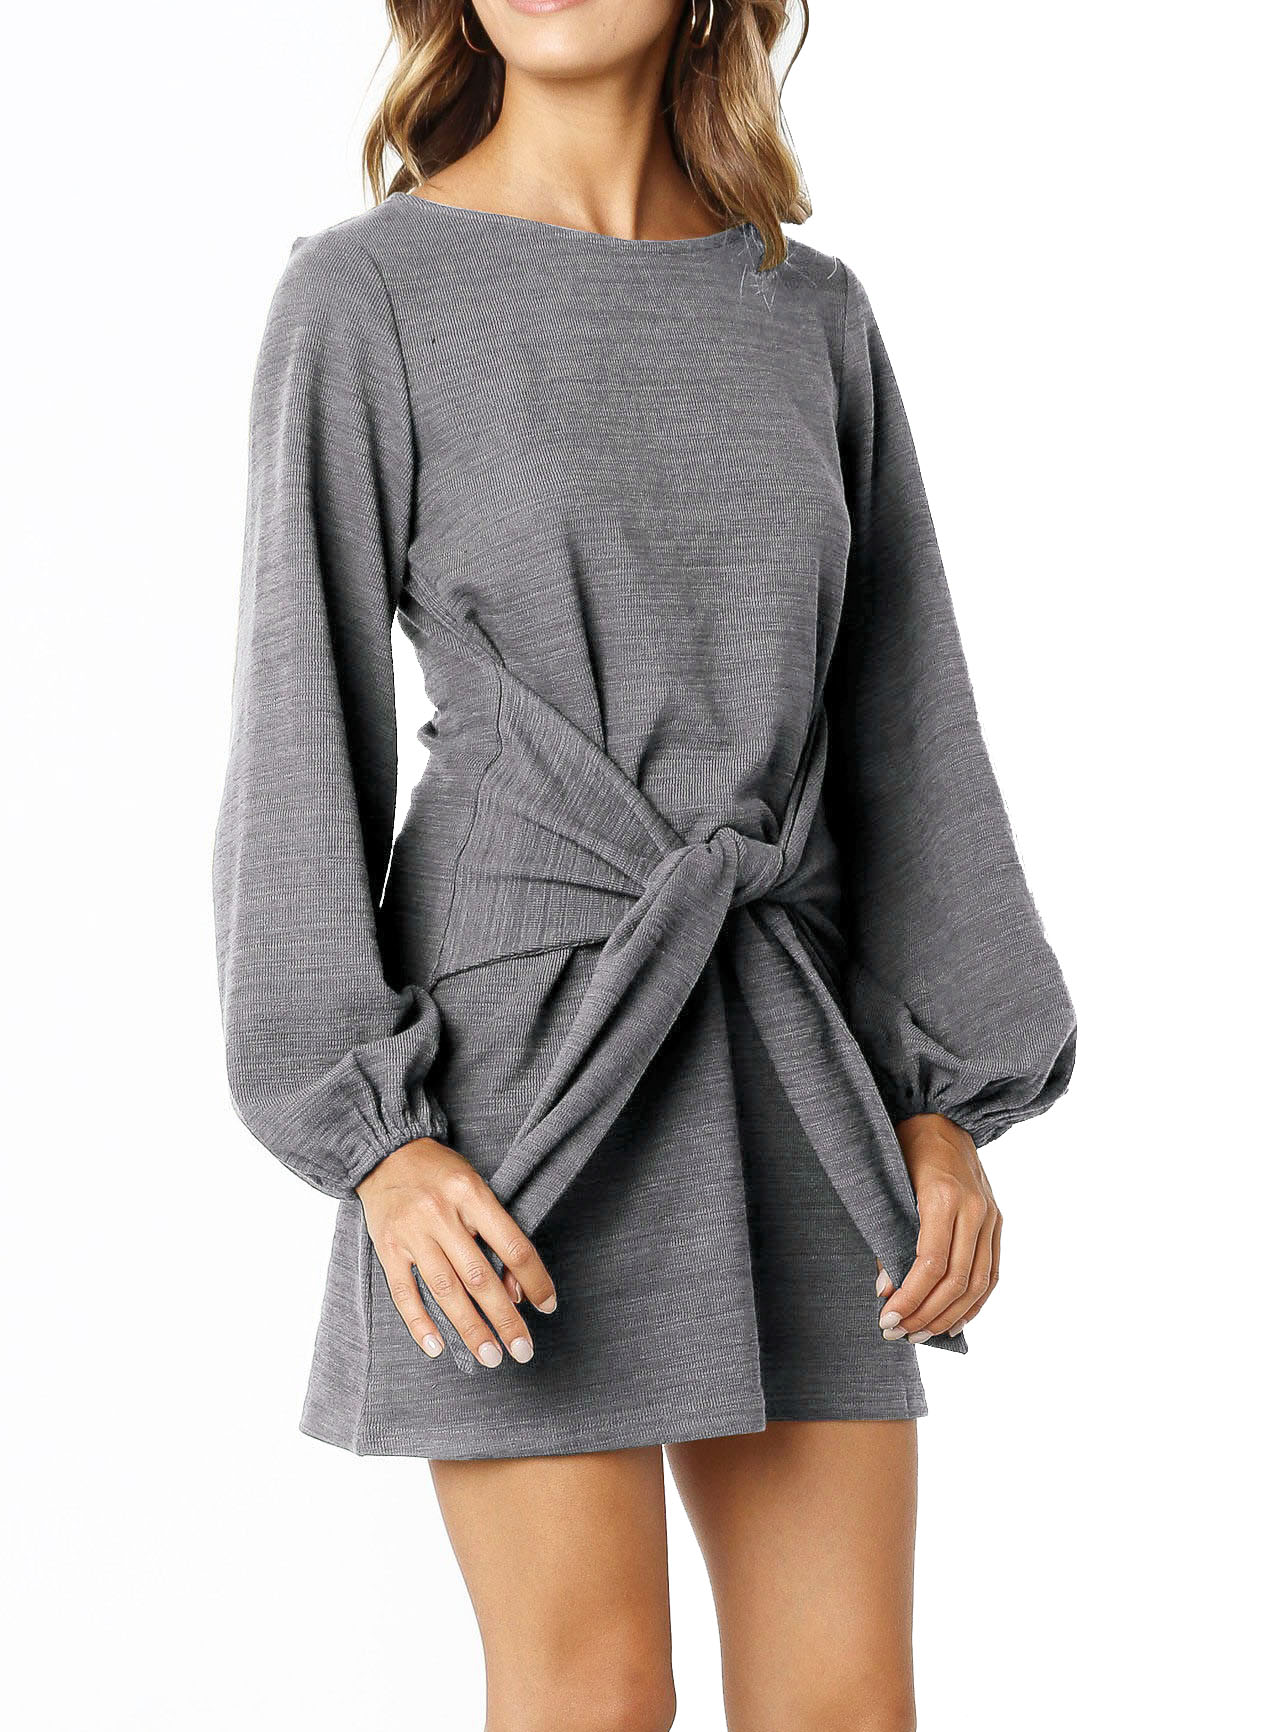 R.Vivimos Women’s Long Sleeve Mini Dress Tie Waist Knit Pullover Sweater Pencil Dress